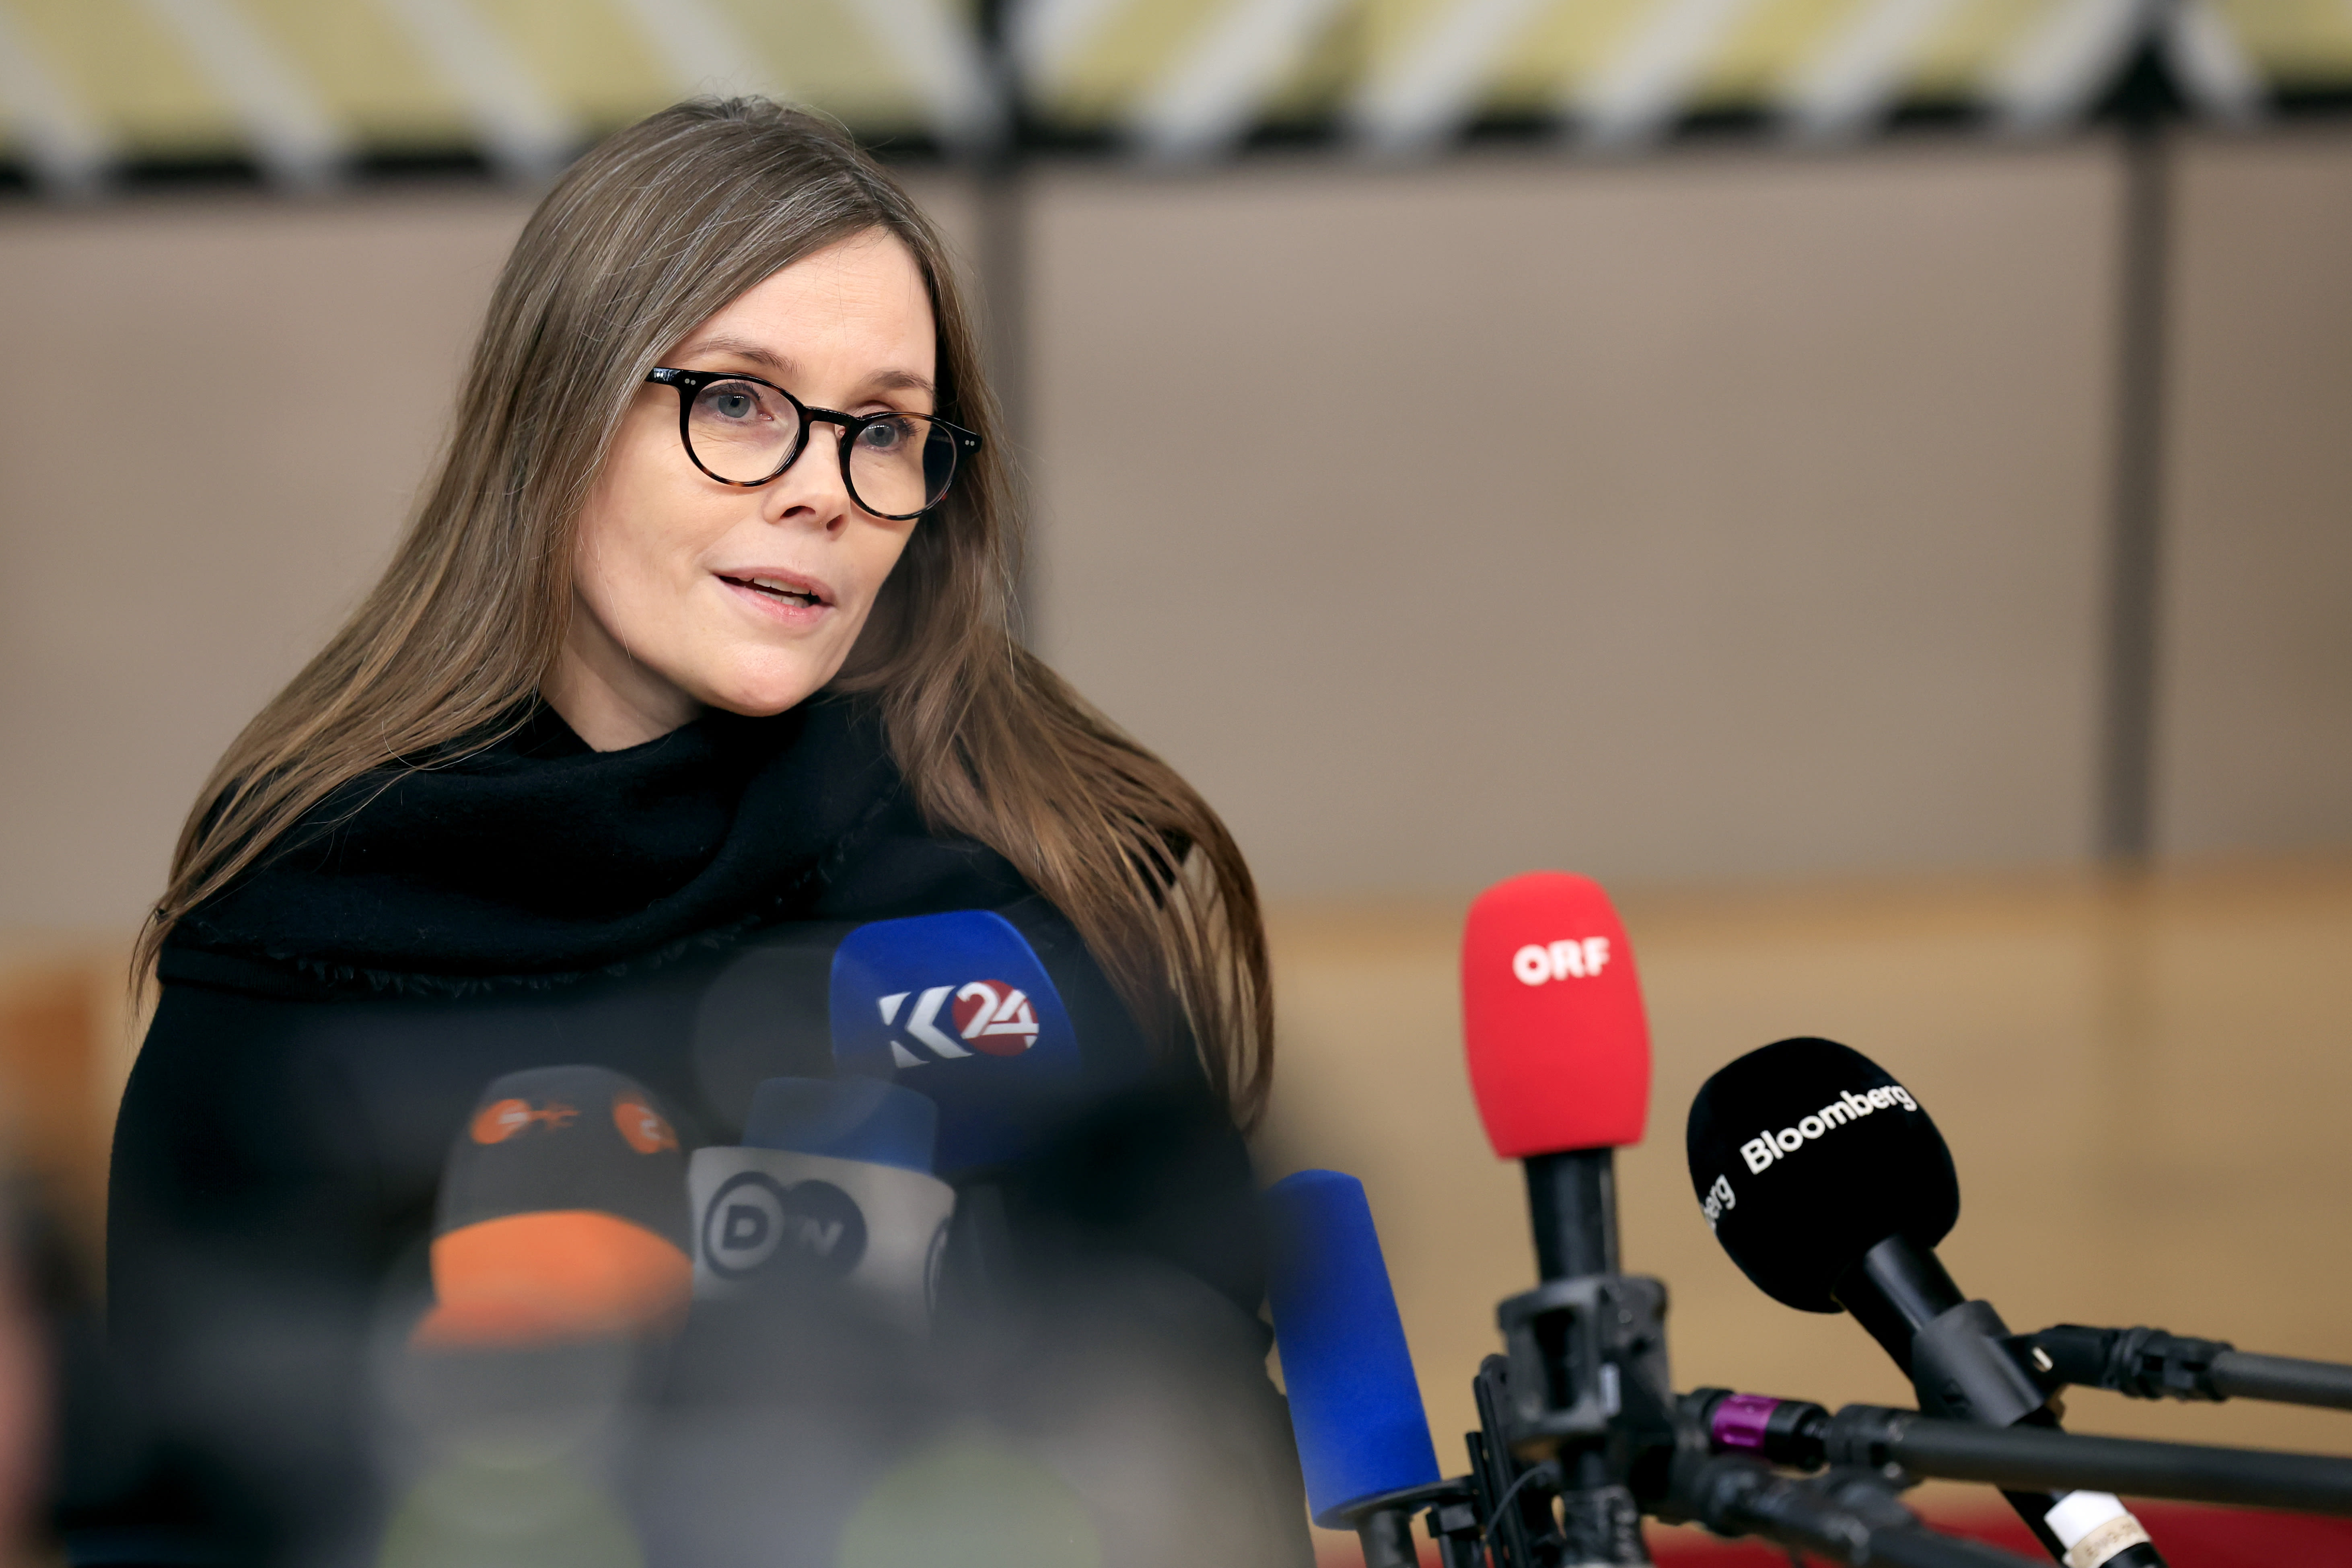 Iceland elects businesswoman Halla Tomasdottir as president